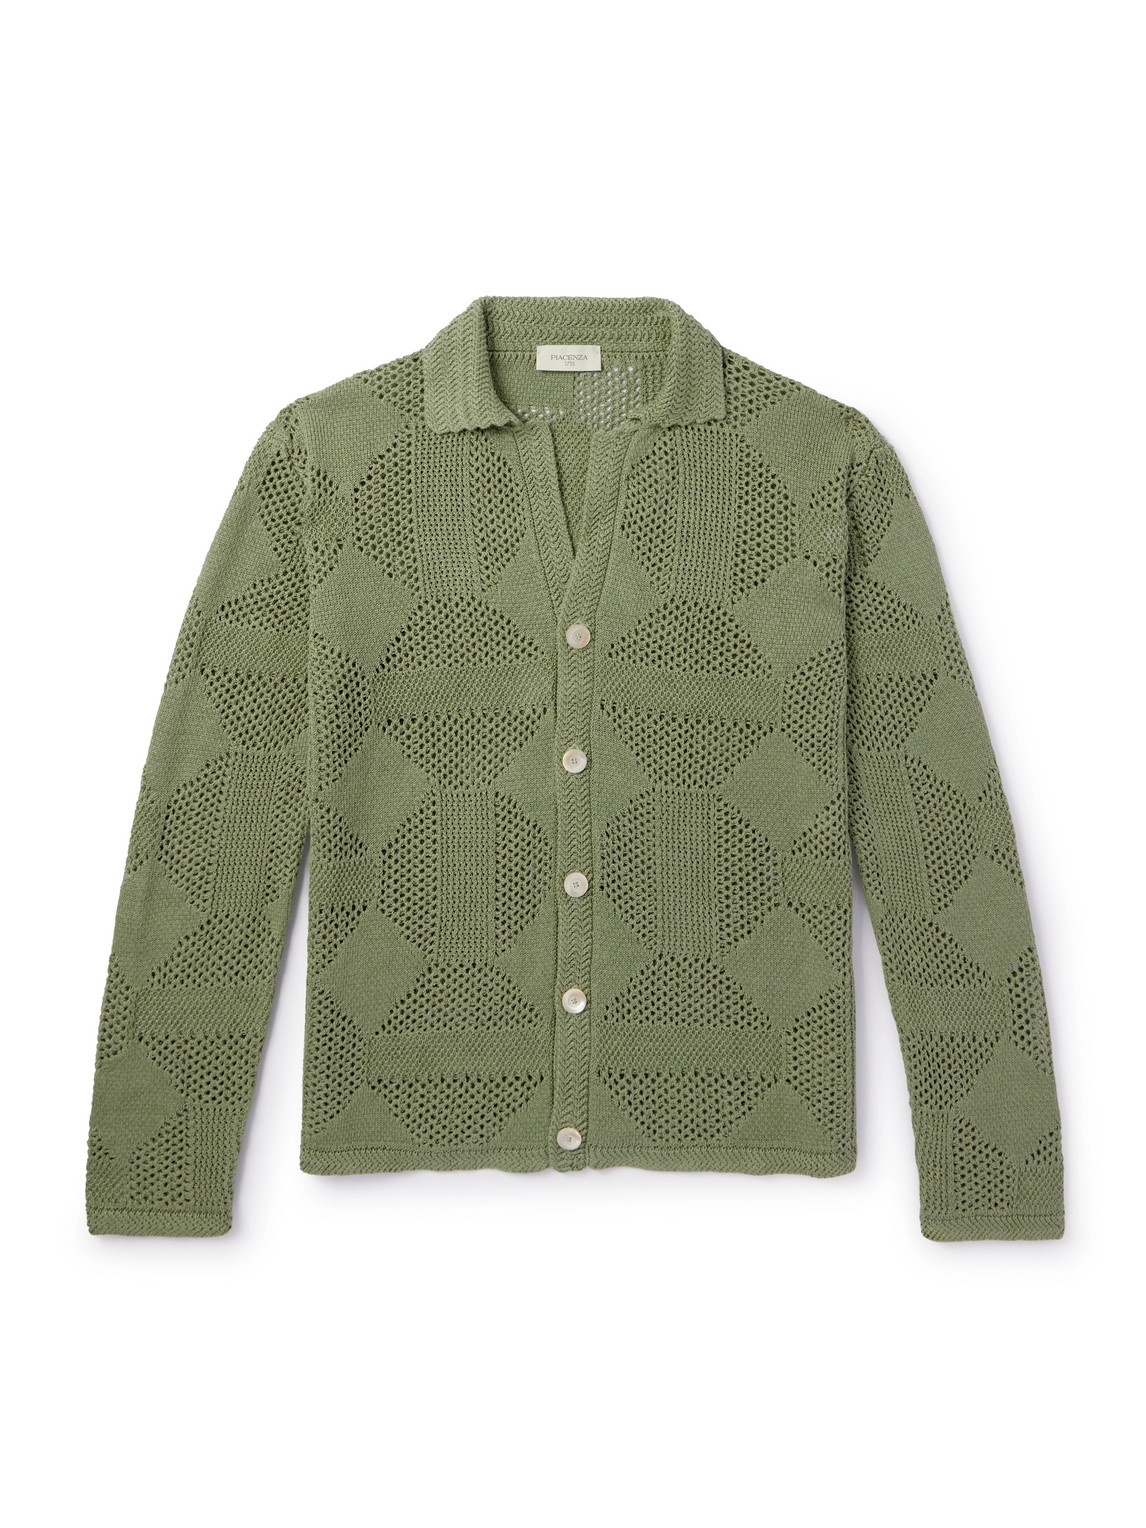 PIACENZA 1733 - Crocheted Linen and Cotton-Blend Shirt - Men - Green - IT 52 von PIACENZA 1733